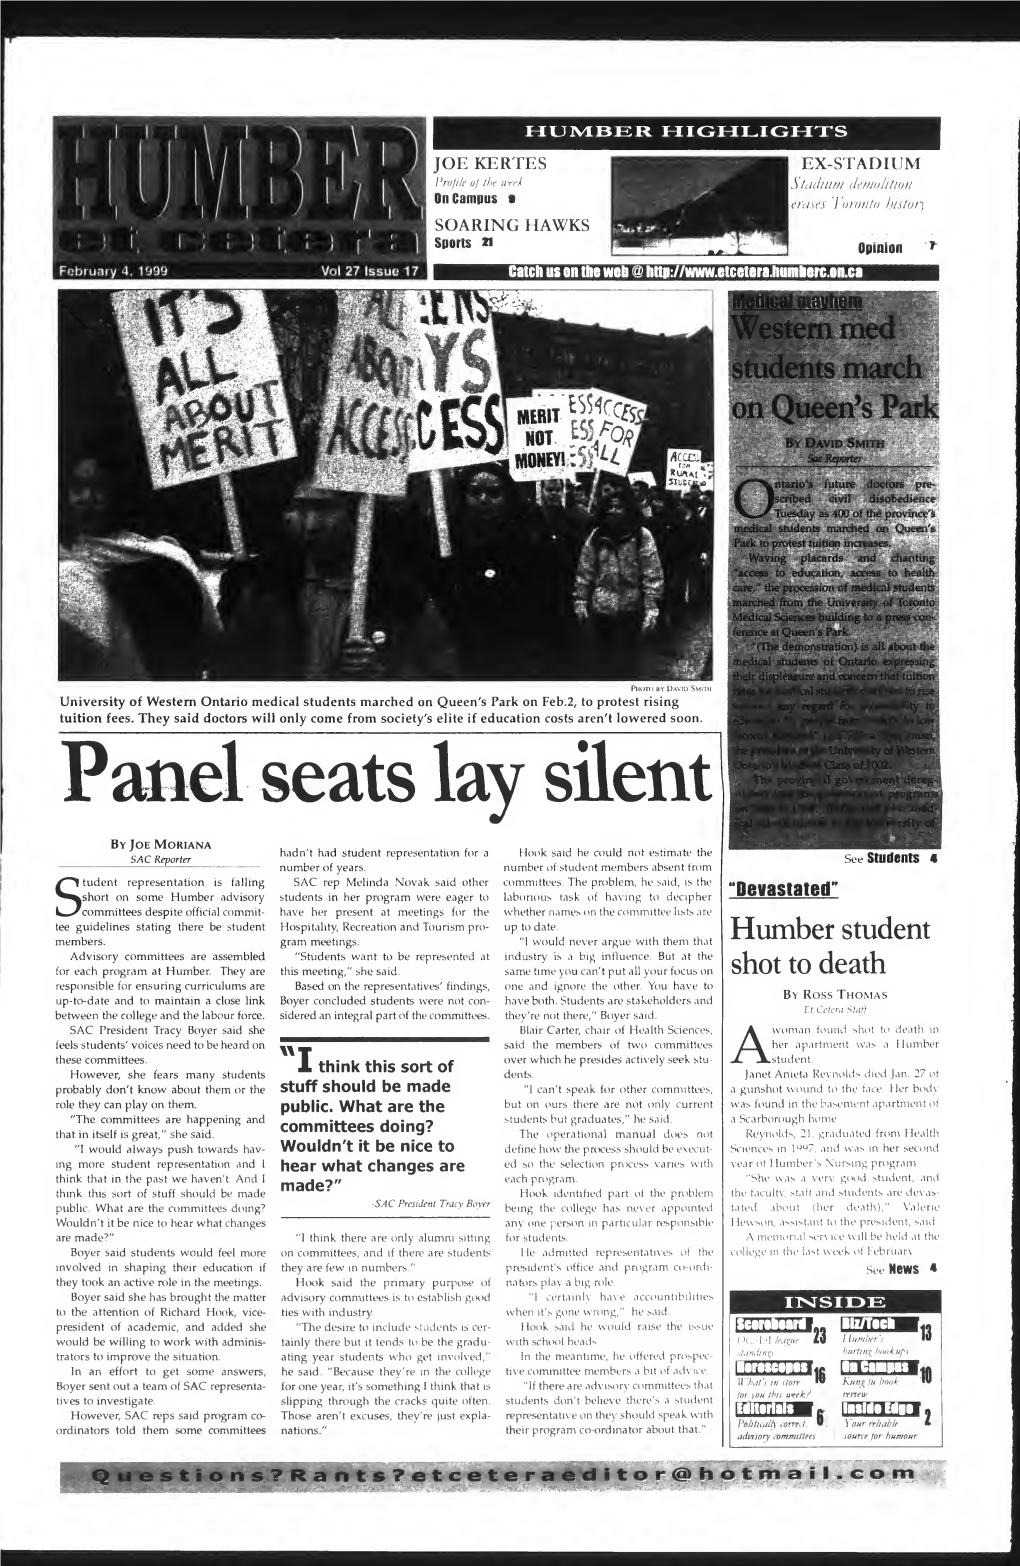 Panel Seats Lay Silent